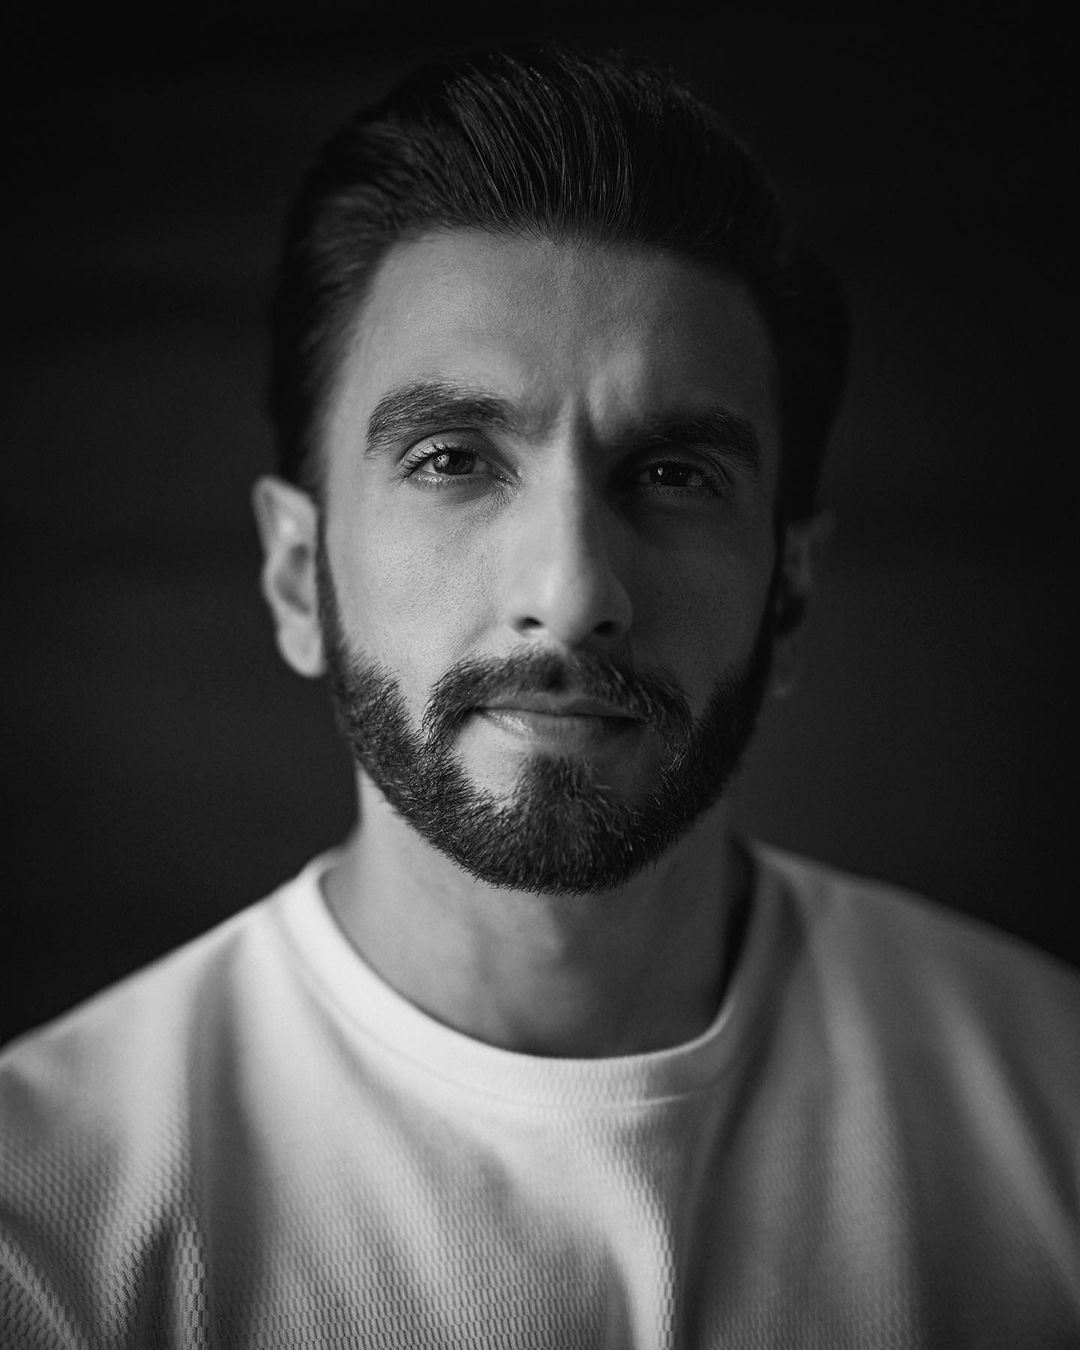 Ranveer Singh Portrait Black and White Photoshoot, January 2022